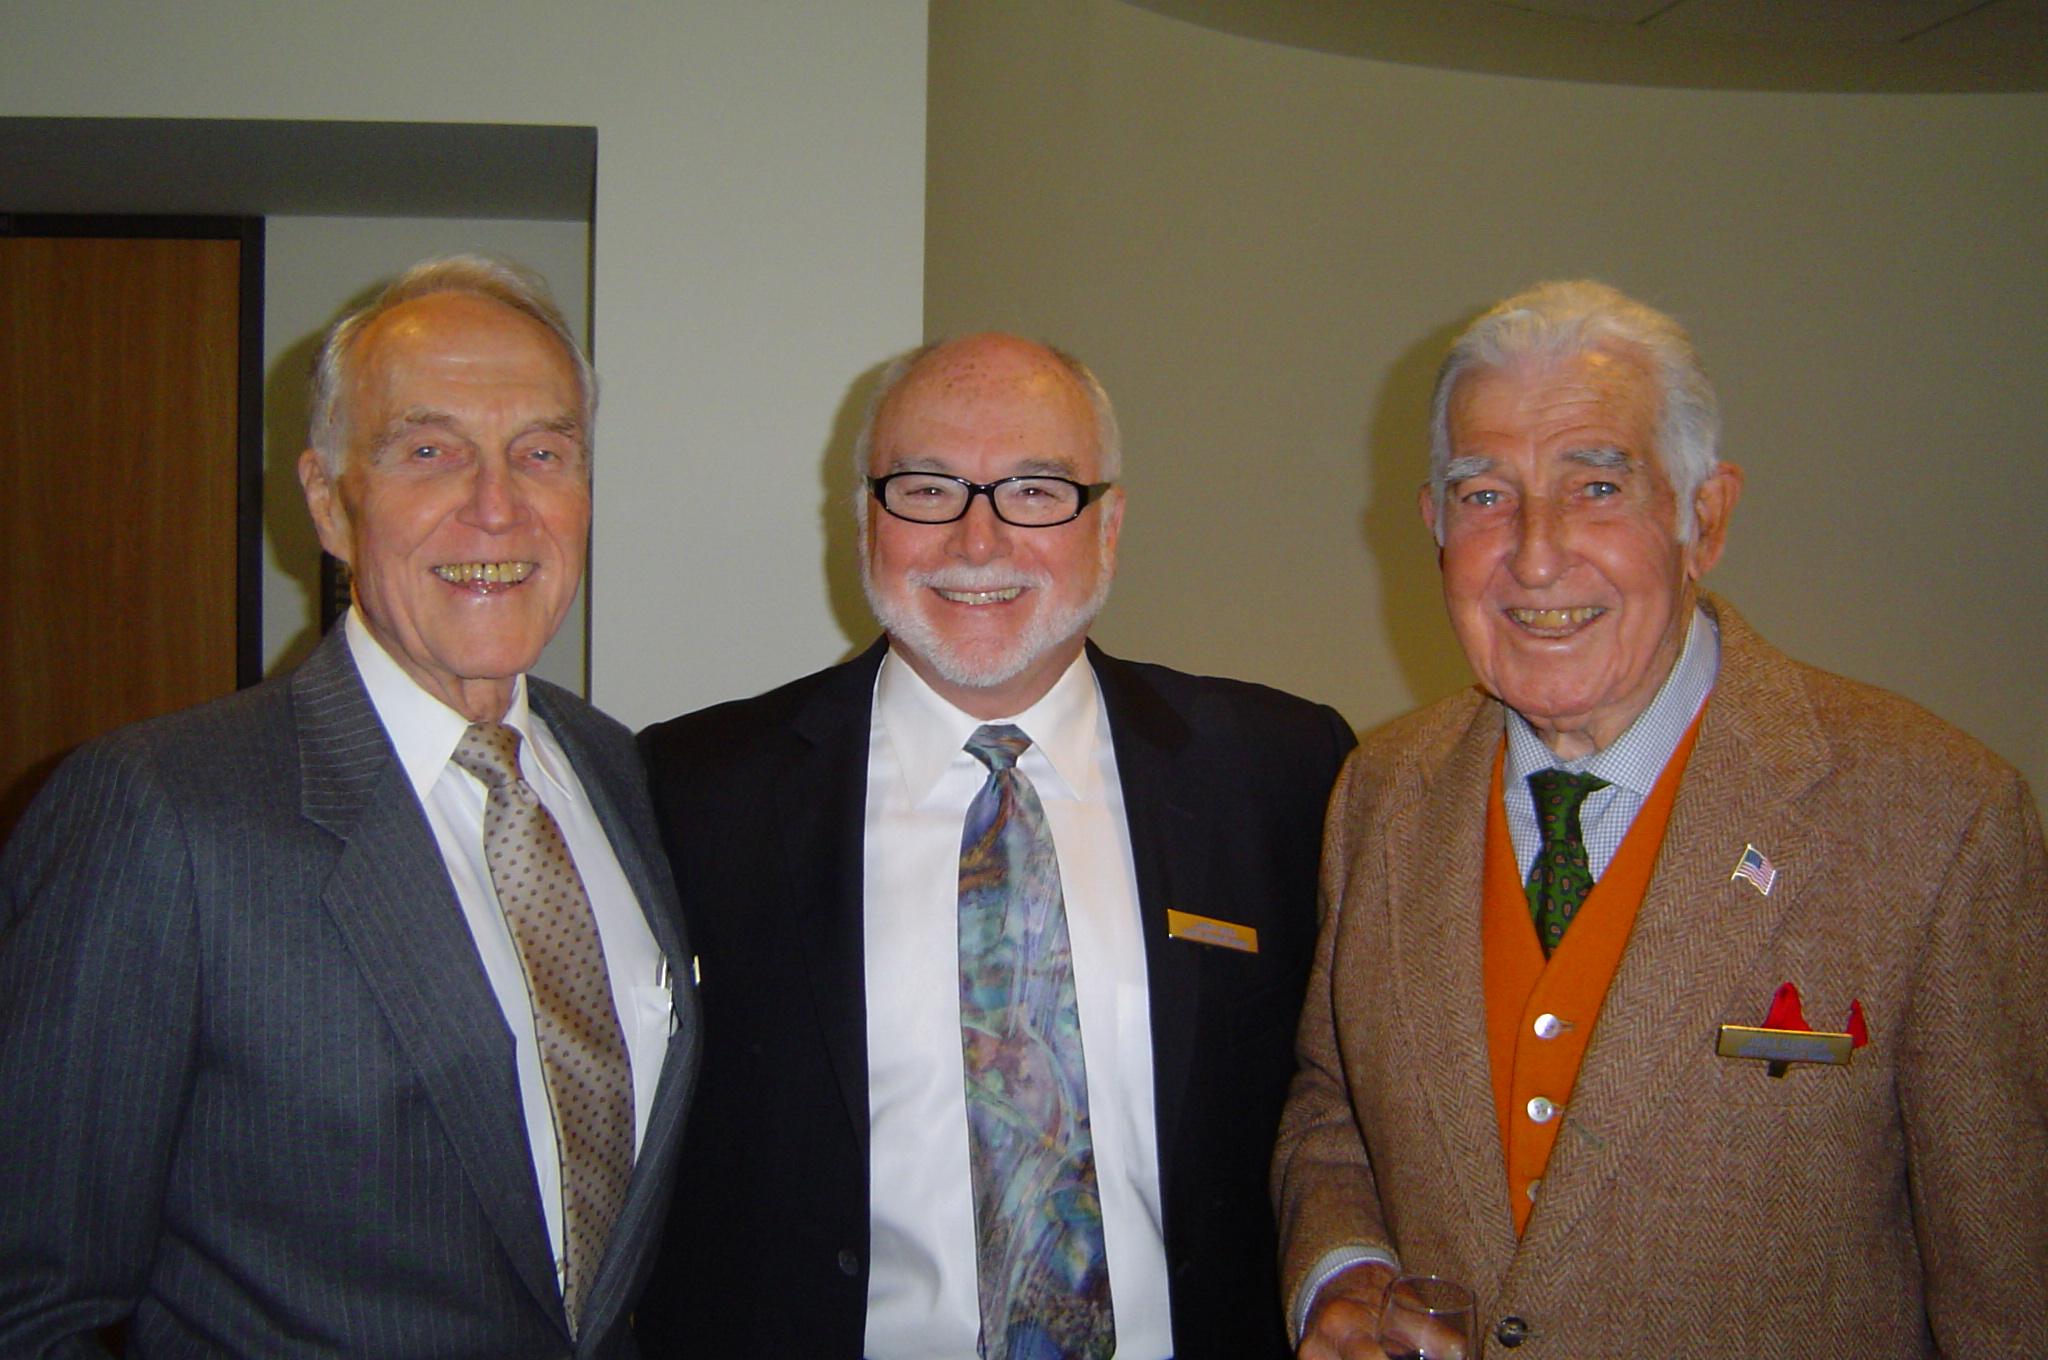 Crest Board members Bob McIntosh, Larry Mira, and John Merrick 
